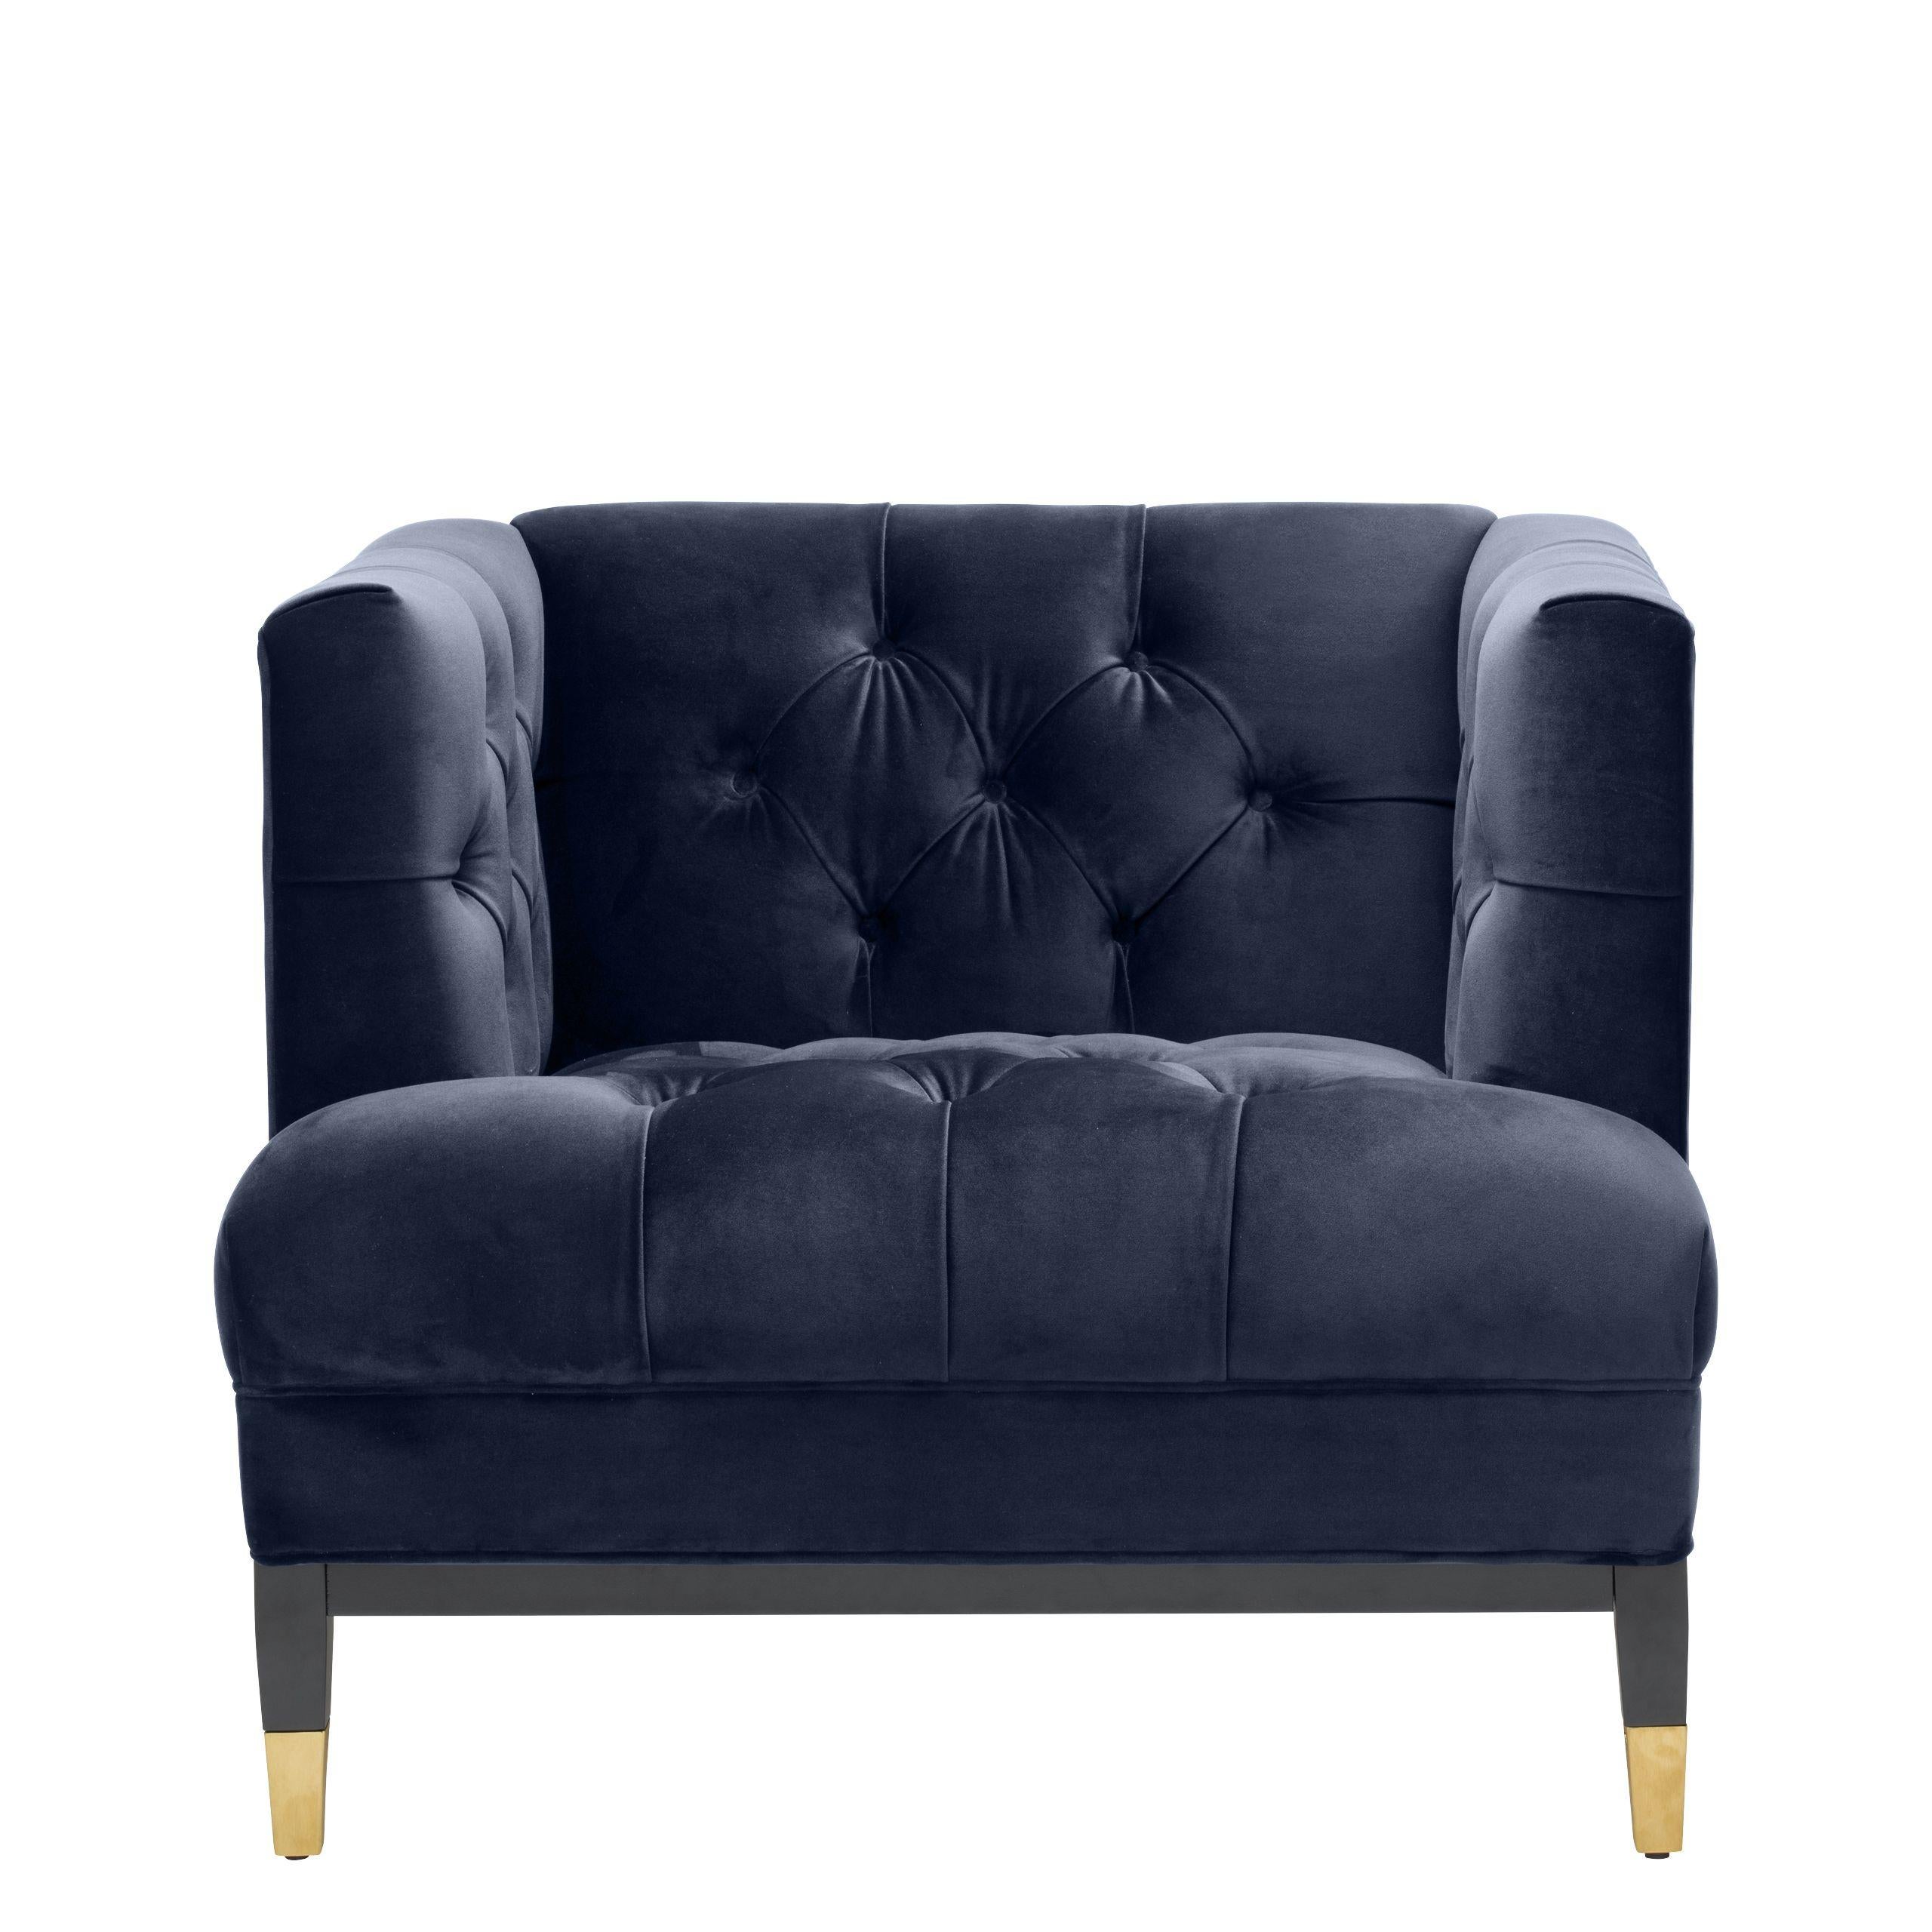 Park Monceau armchair 
Savona midnight blue velvet black/brass legs
100 % polyester
W. 93 D. 85 H. 79 cm.